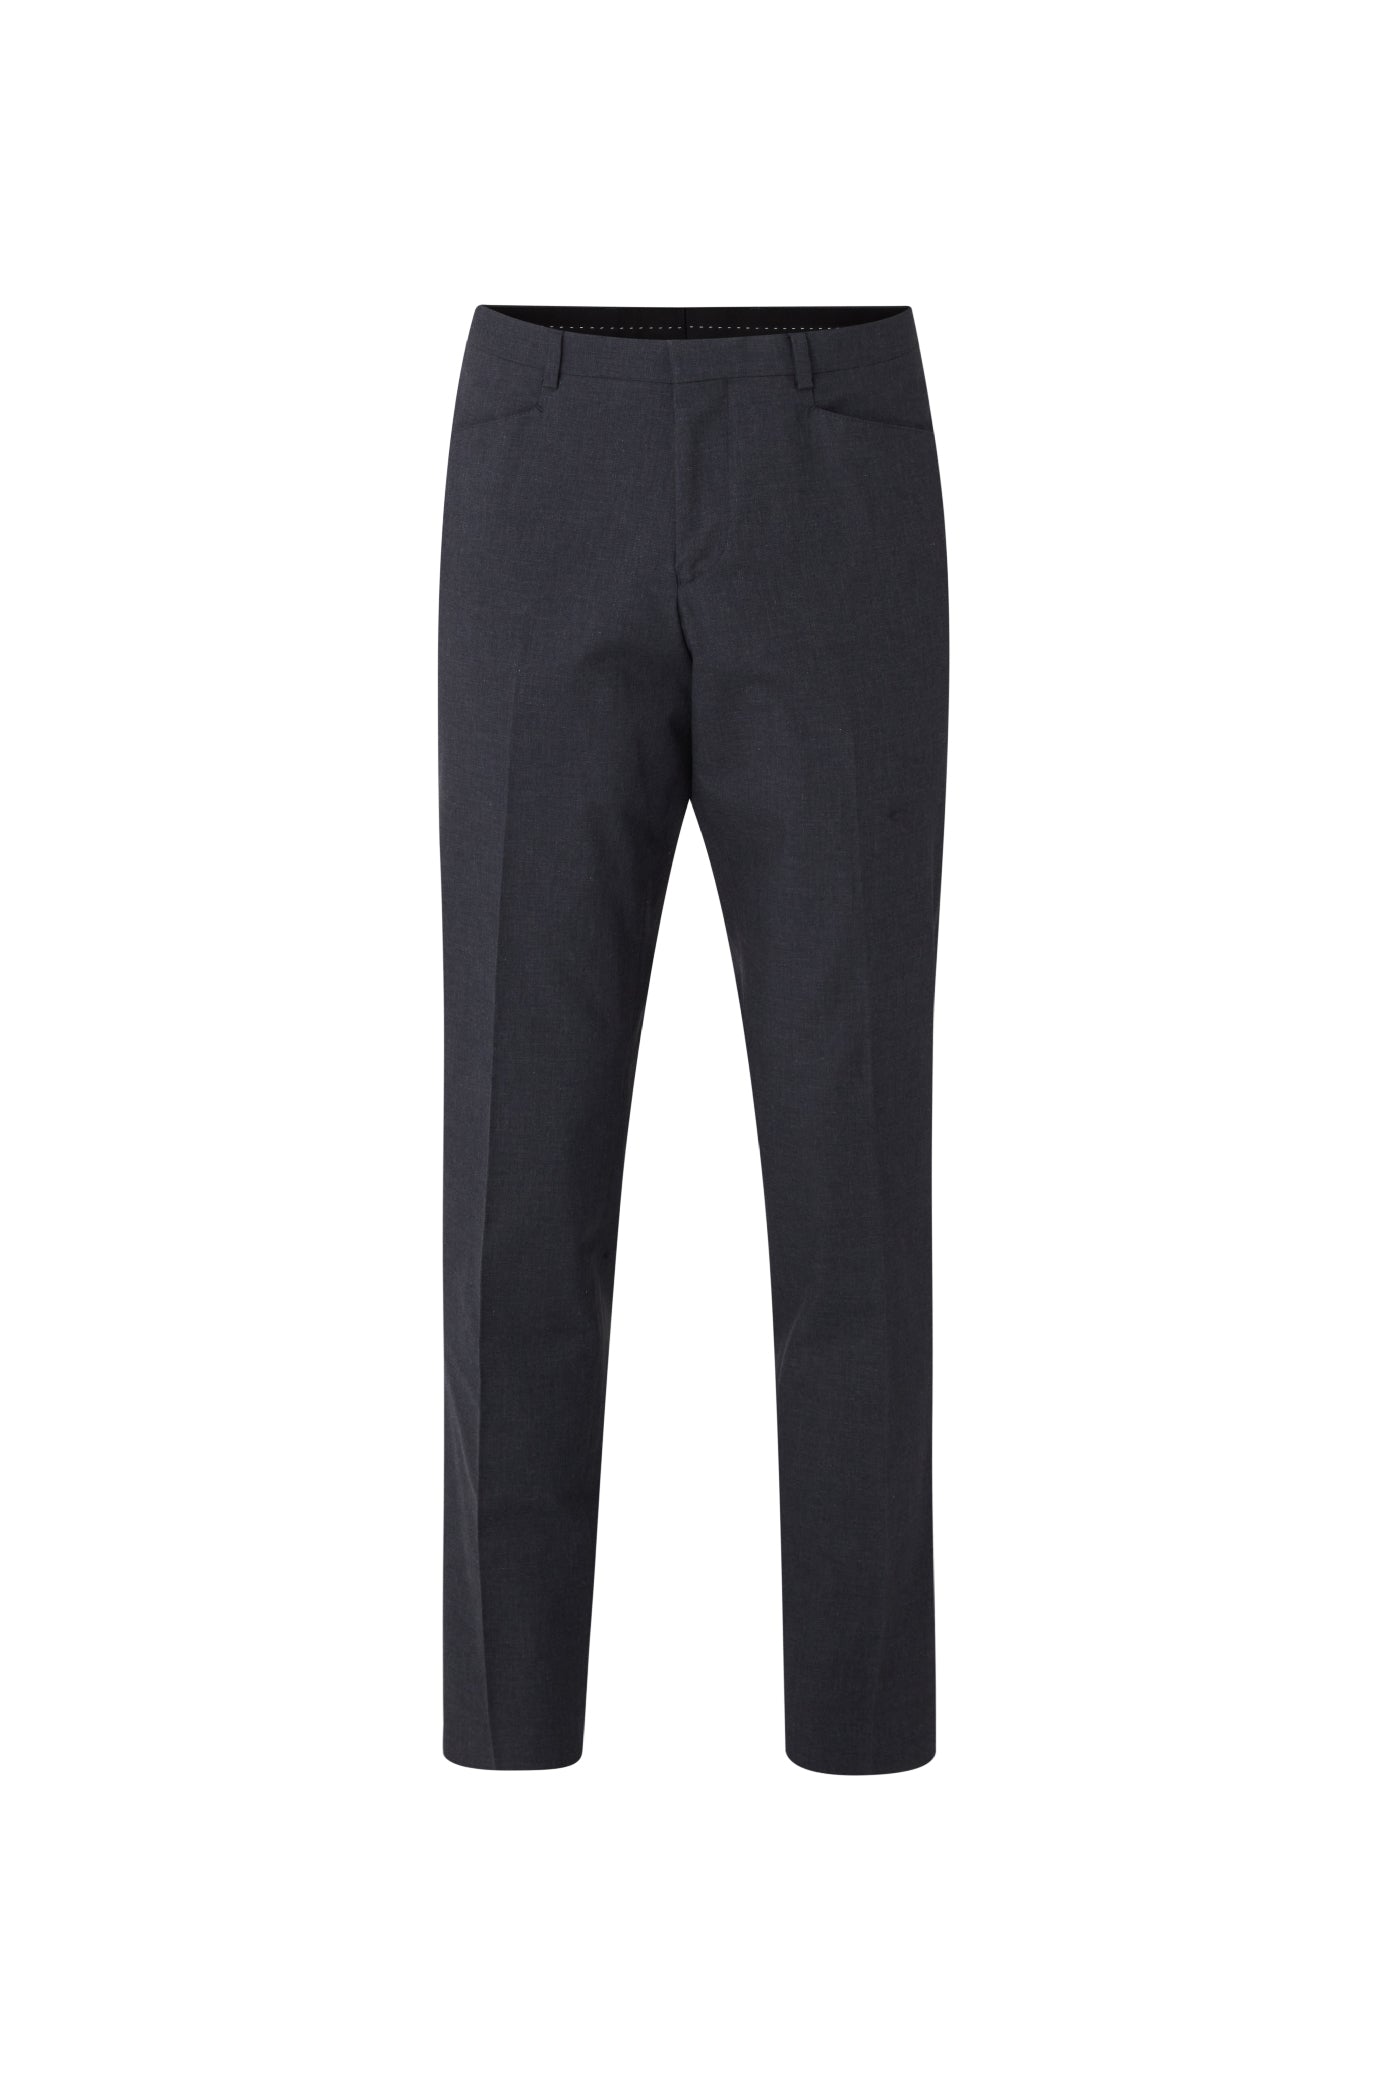 Reese cotton stretch plain trouser